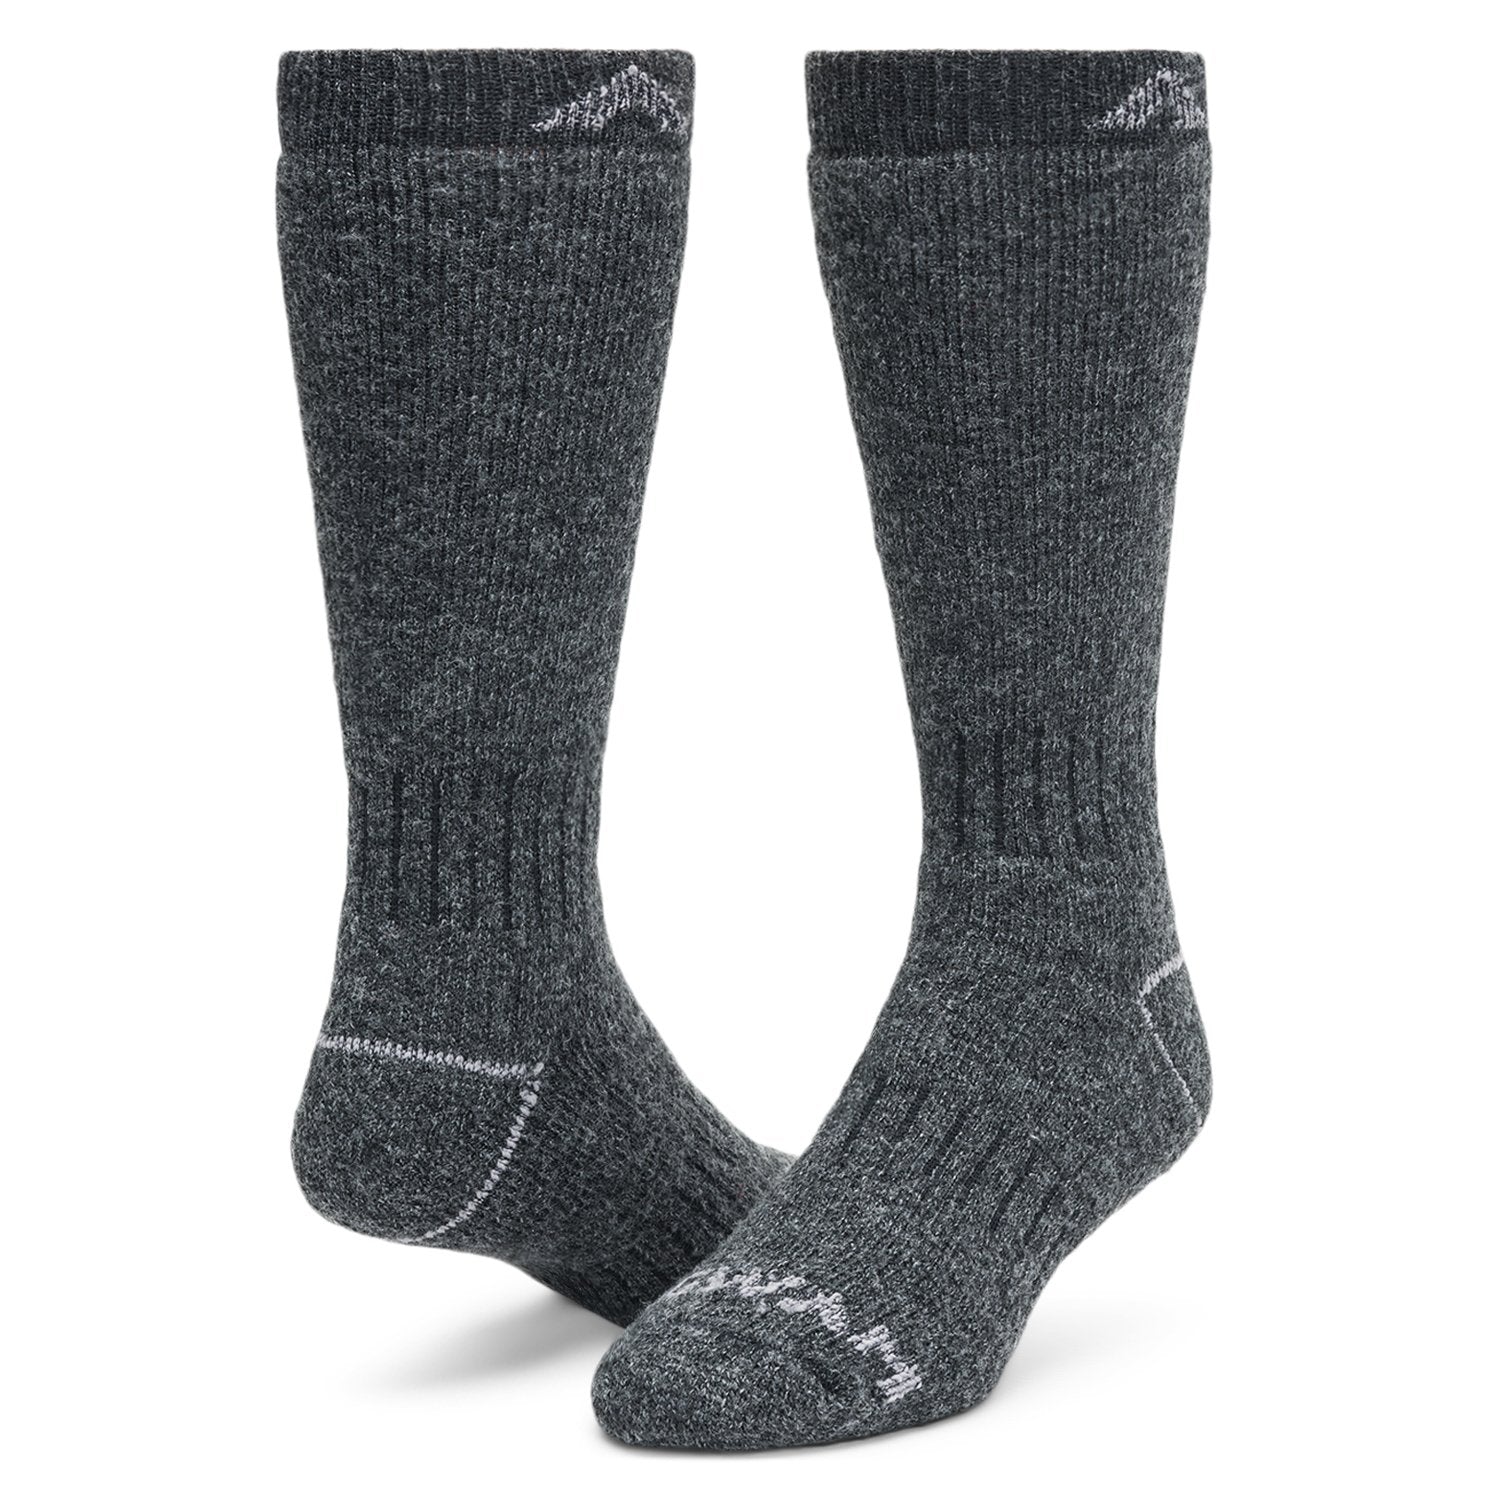 40 Below II Wool Heavyweight Sock - Black full product perspective - made in The USA Wigwam Socks